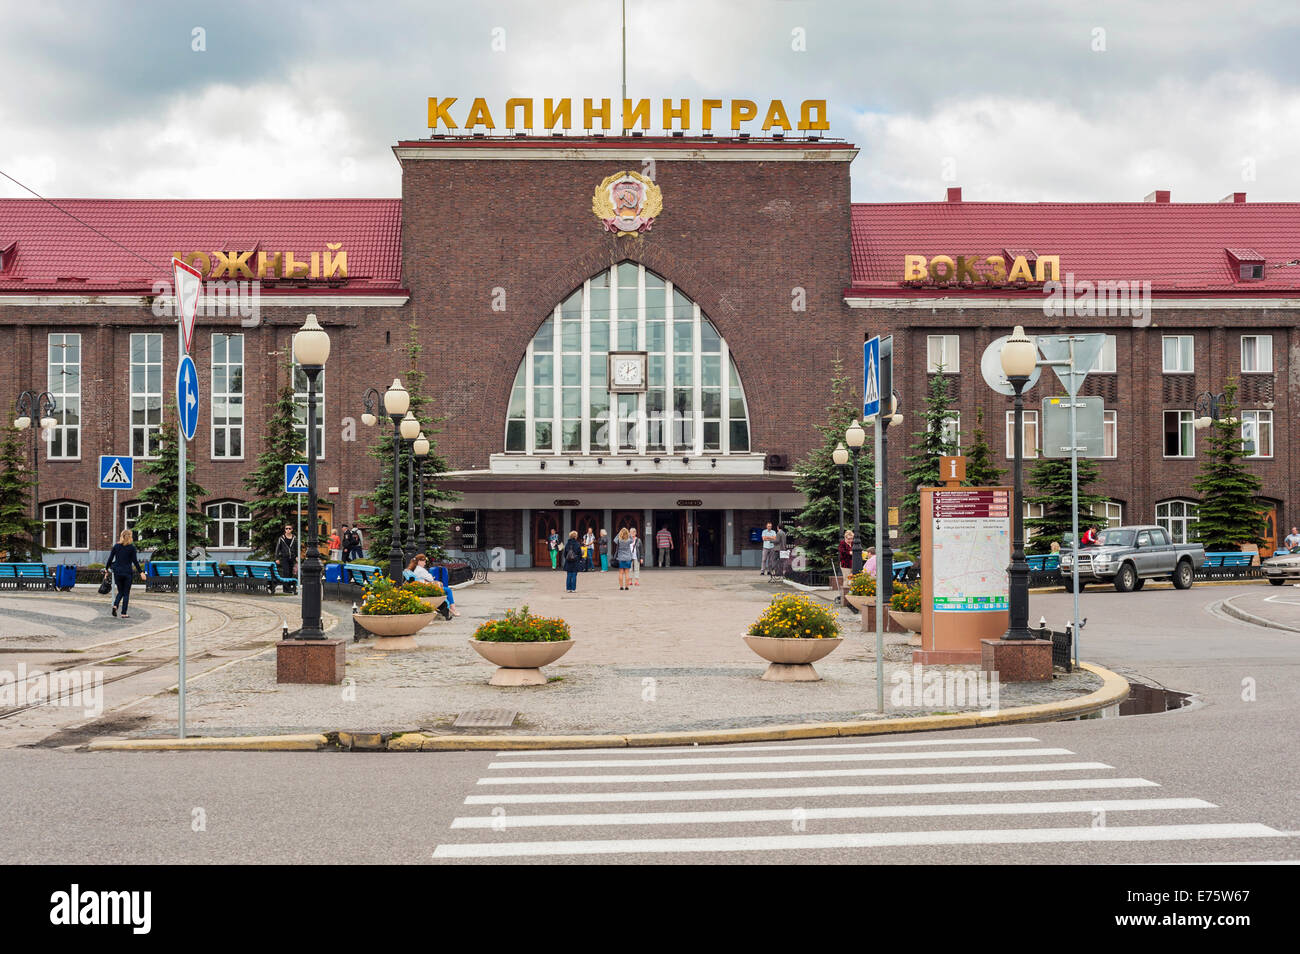 La gare du sud, Baltijskij rajon, Kaliningrad, oblast de Kaliningrad, Russie Banque D'Images